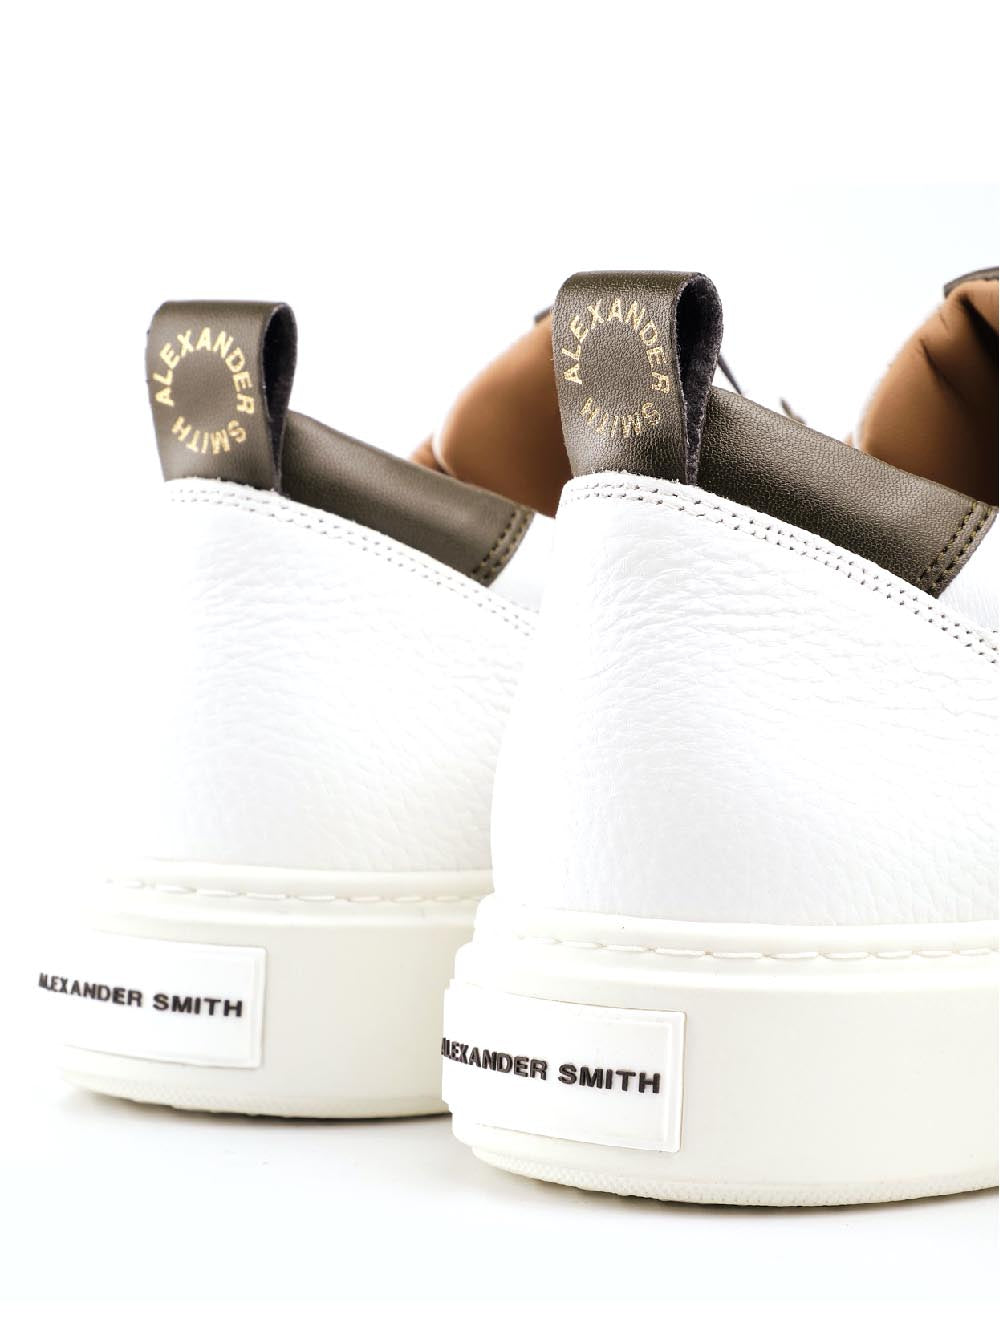 Alexander Smith Sneakers Uomo Bianco/marrone